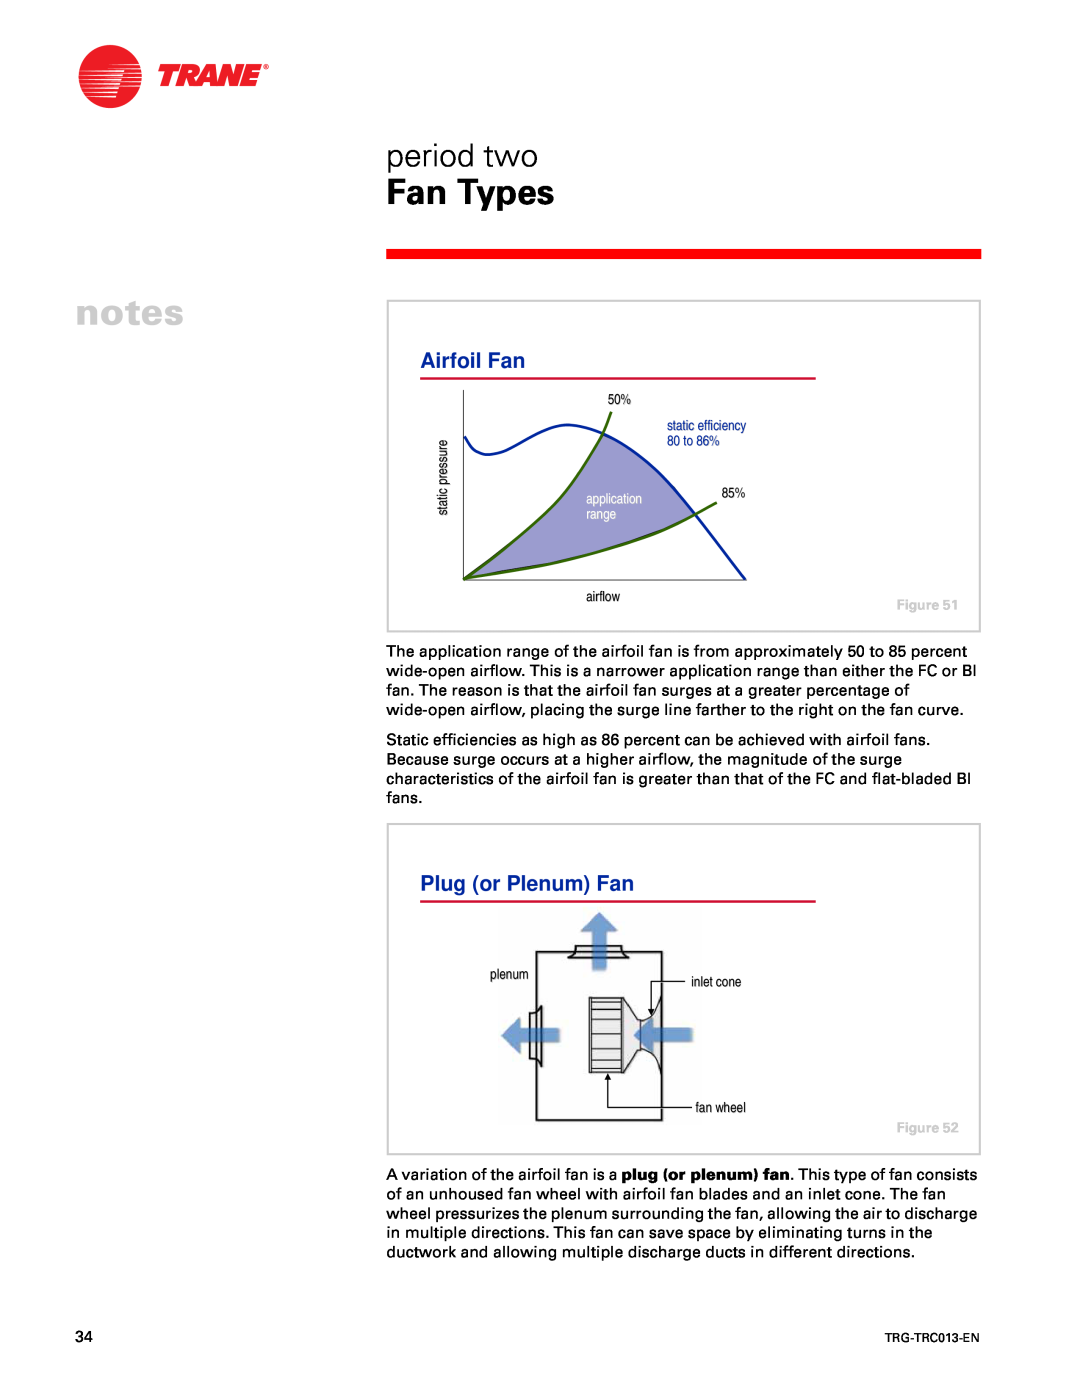 Trane TRG-TRC013-EN Plug or Plenum Fan, Airfoil Fan, static efficiency, 80 to 86%, application, range, airflow, plenum 